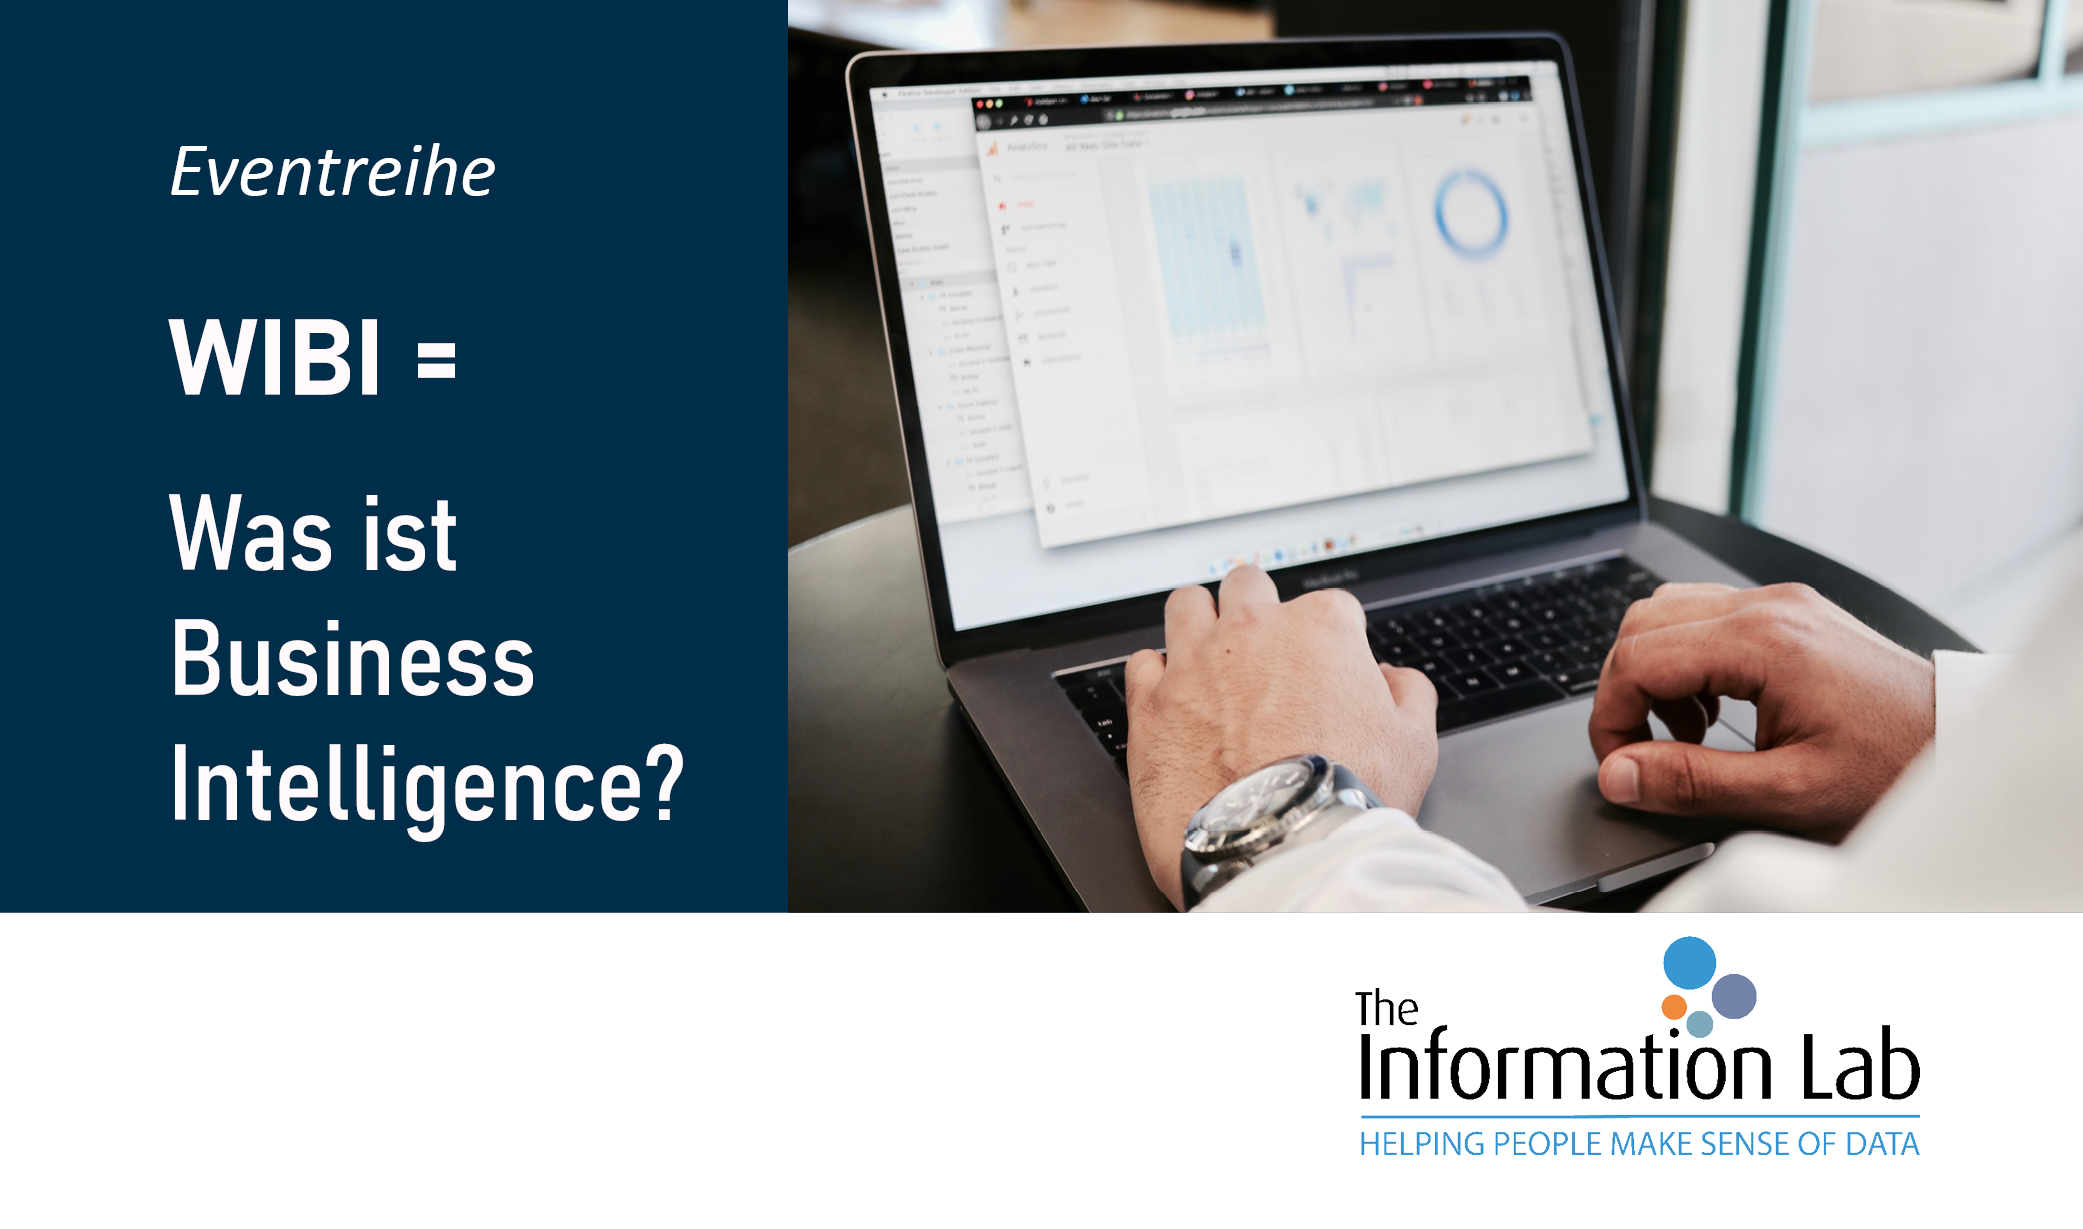 WIBI = Was ist Business Intelligence?